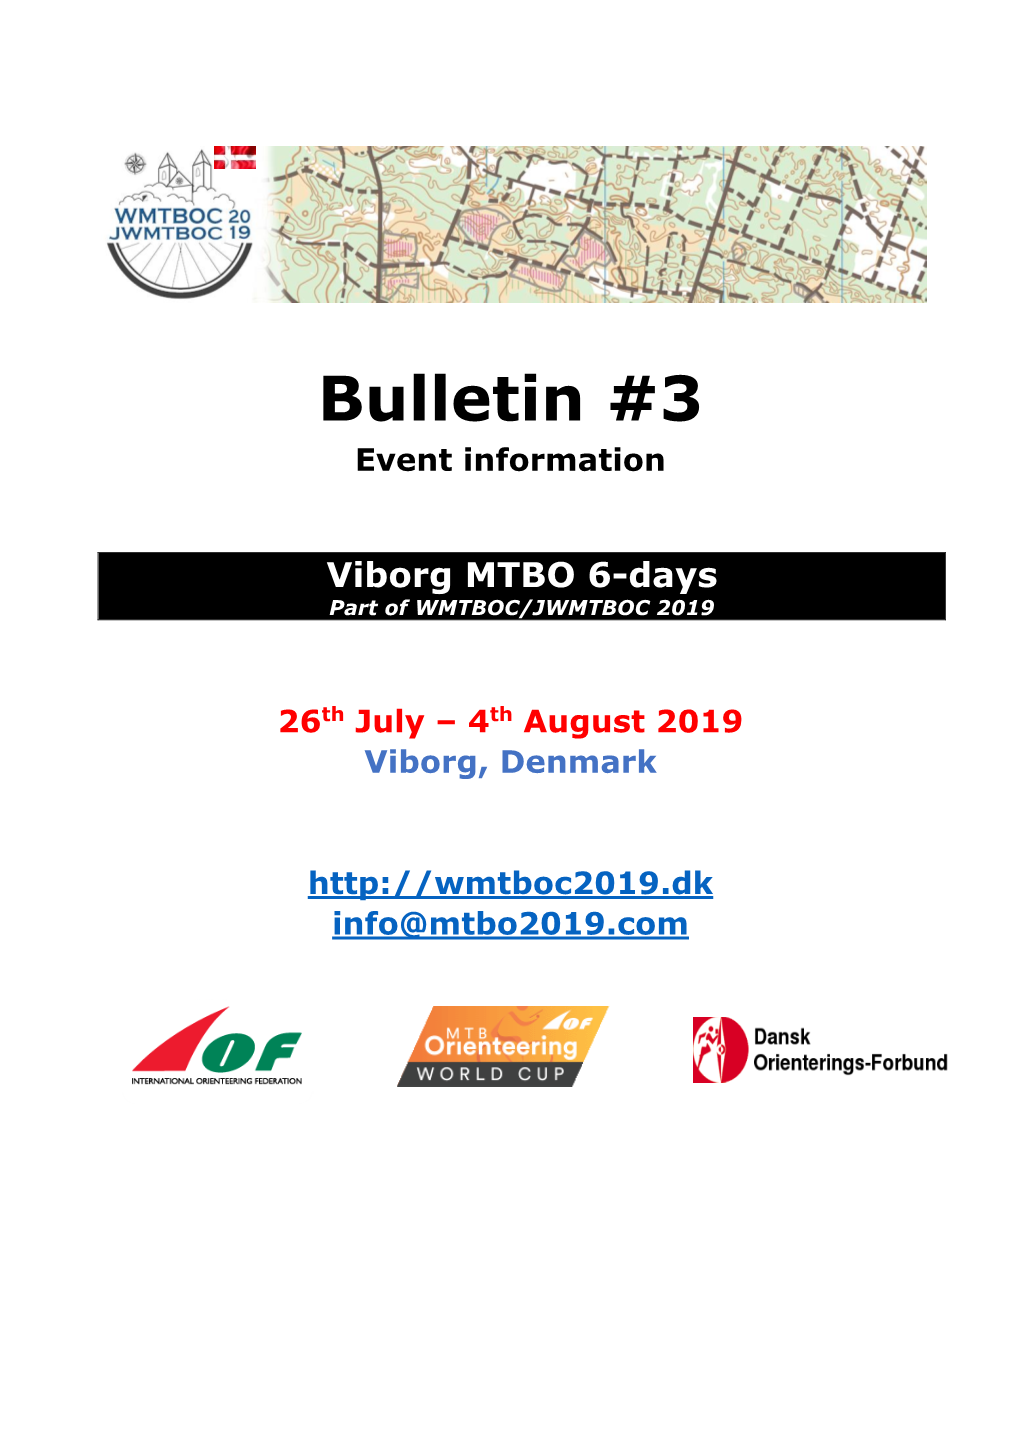 Bulletin #3 Event Information